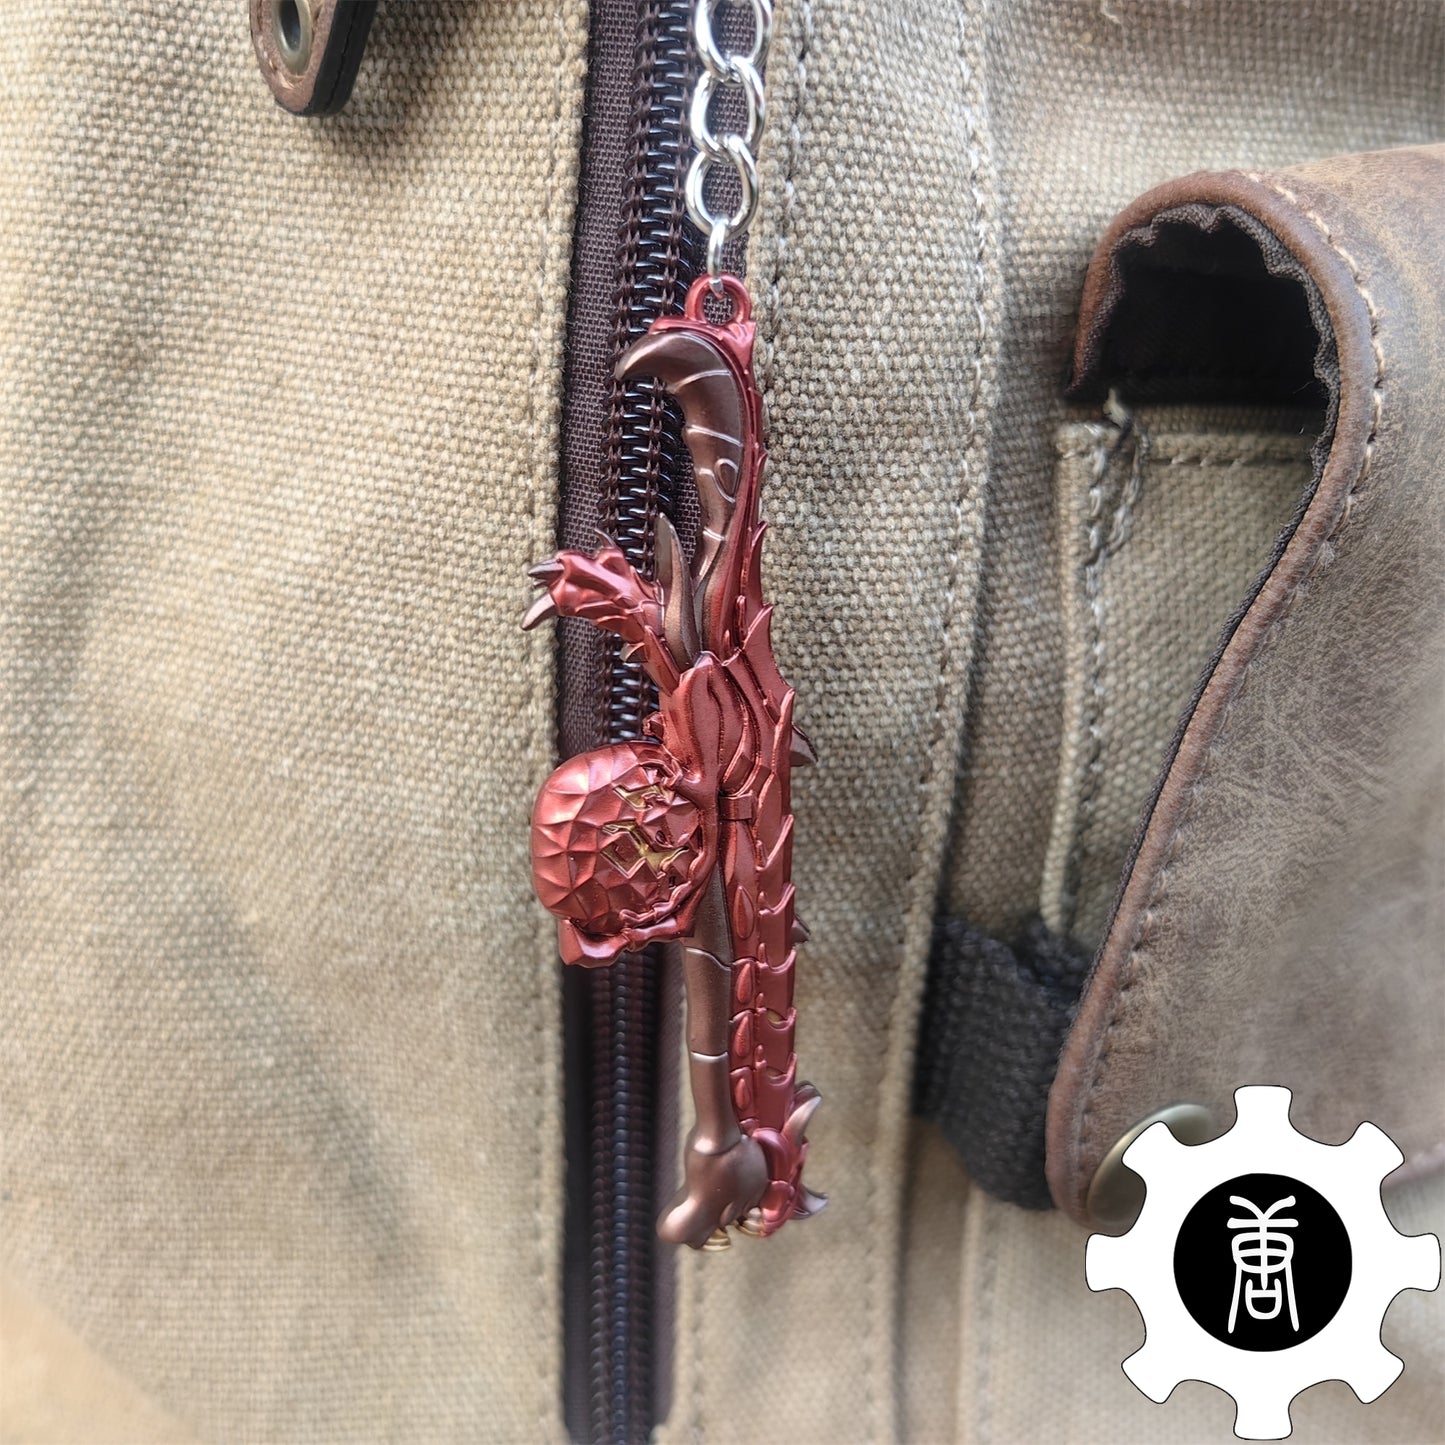 Elderflame Judge Skin Gun Keychain Backpack Decor Cool Gift 3 In 1 Pack